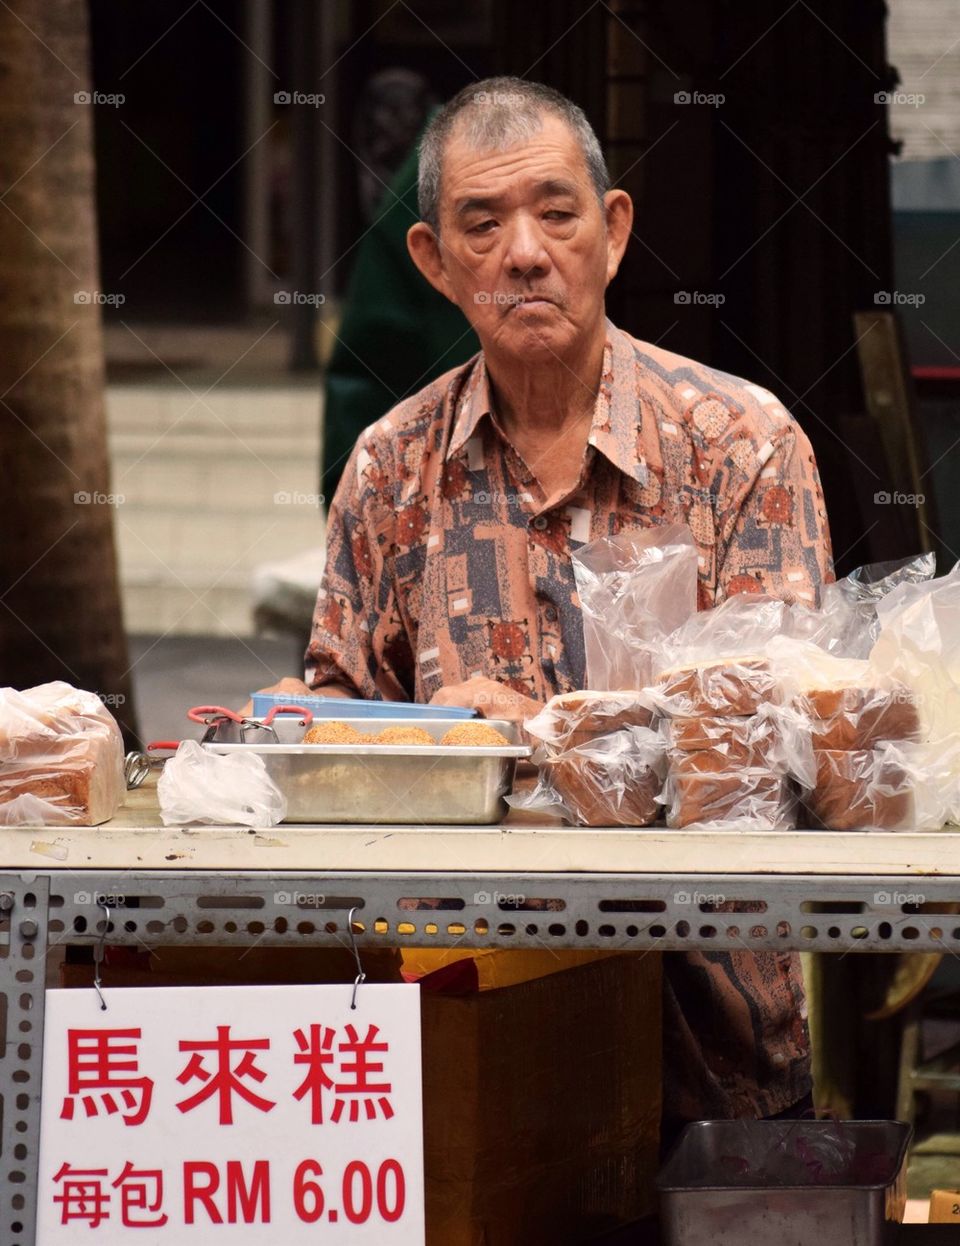 Oldman selling dessert